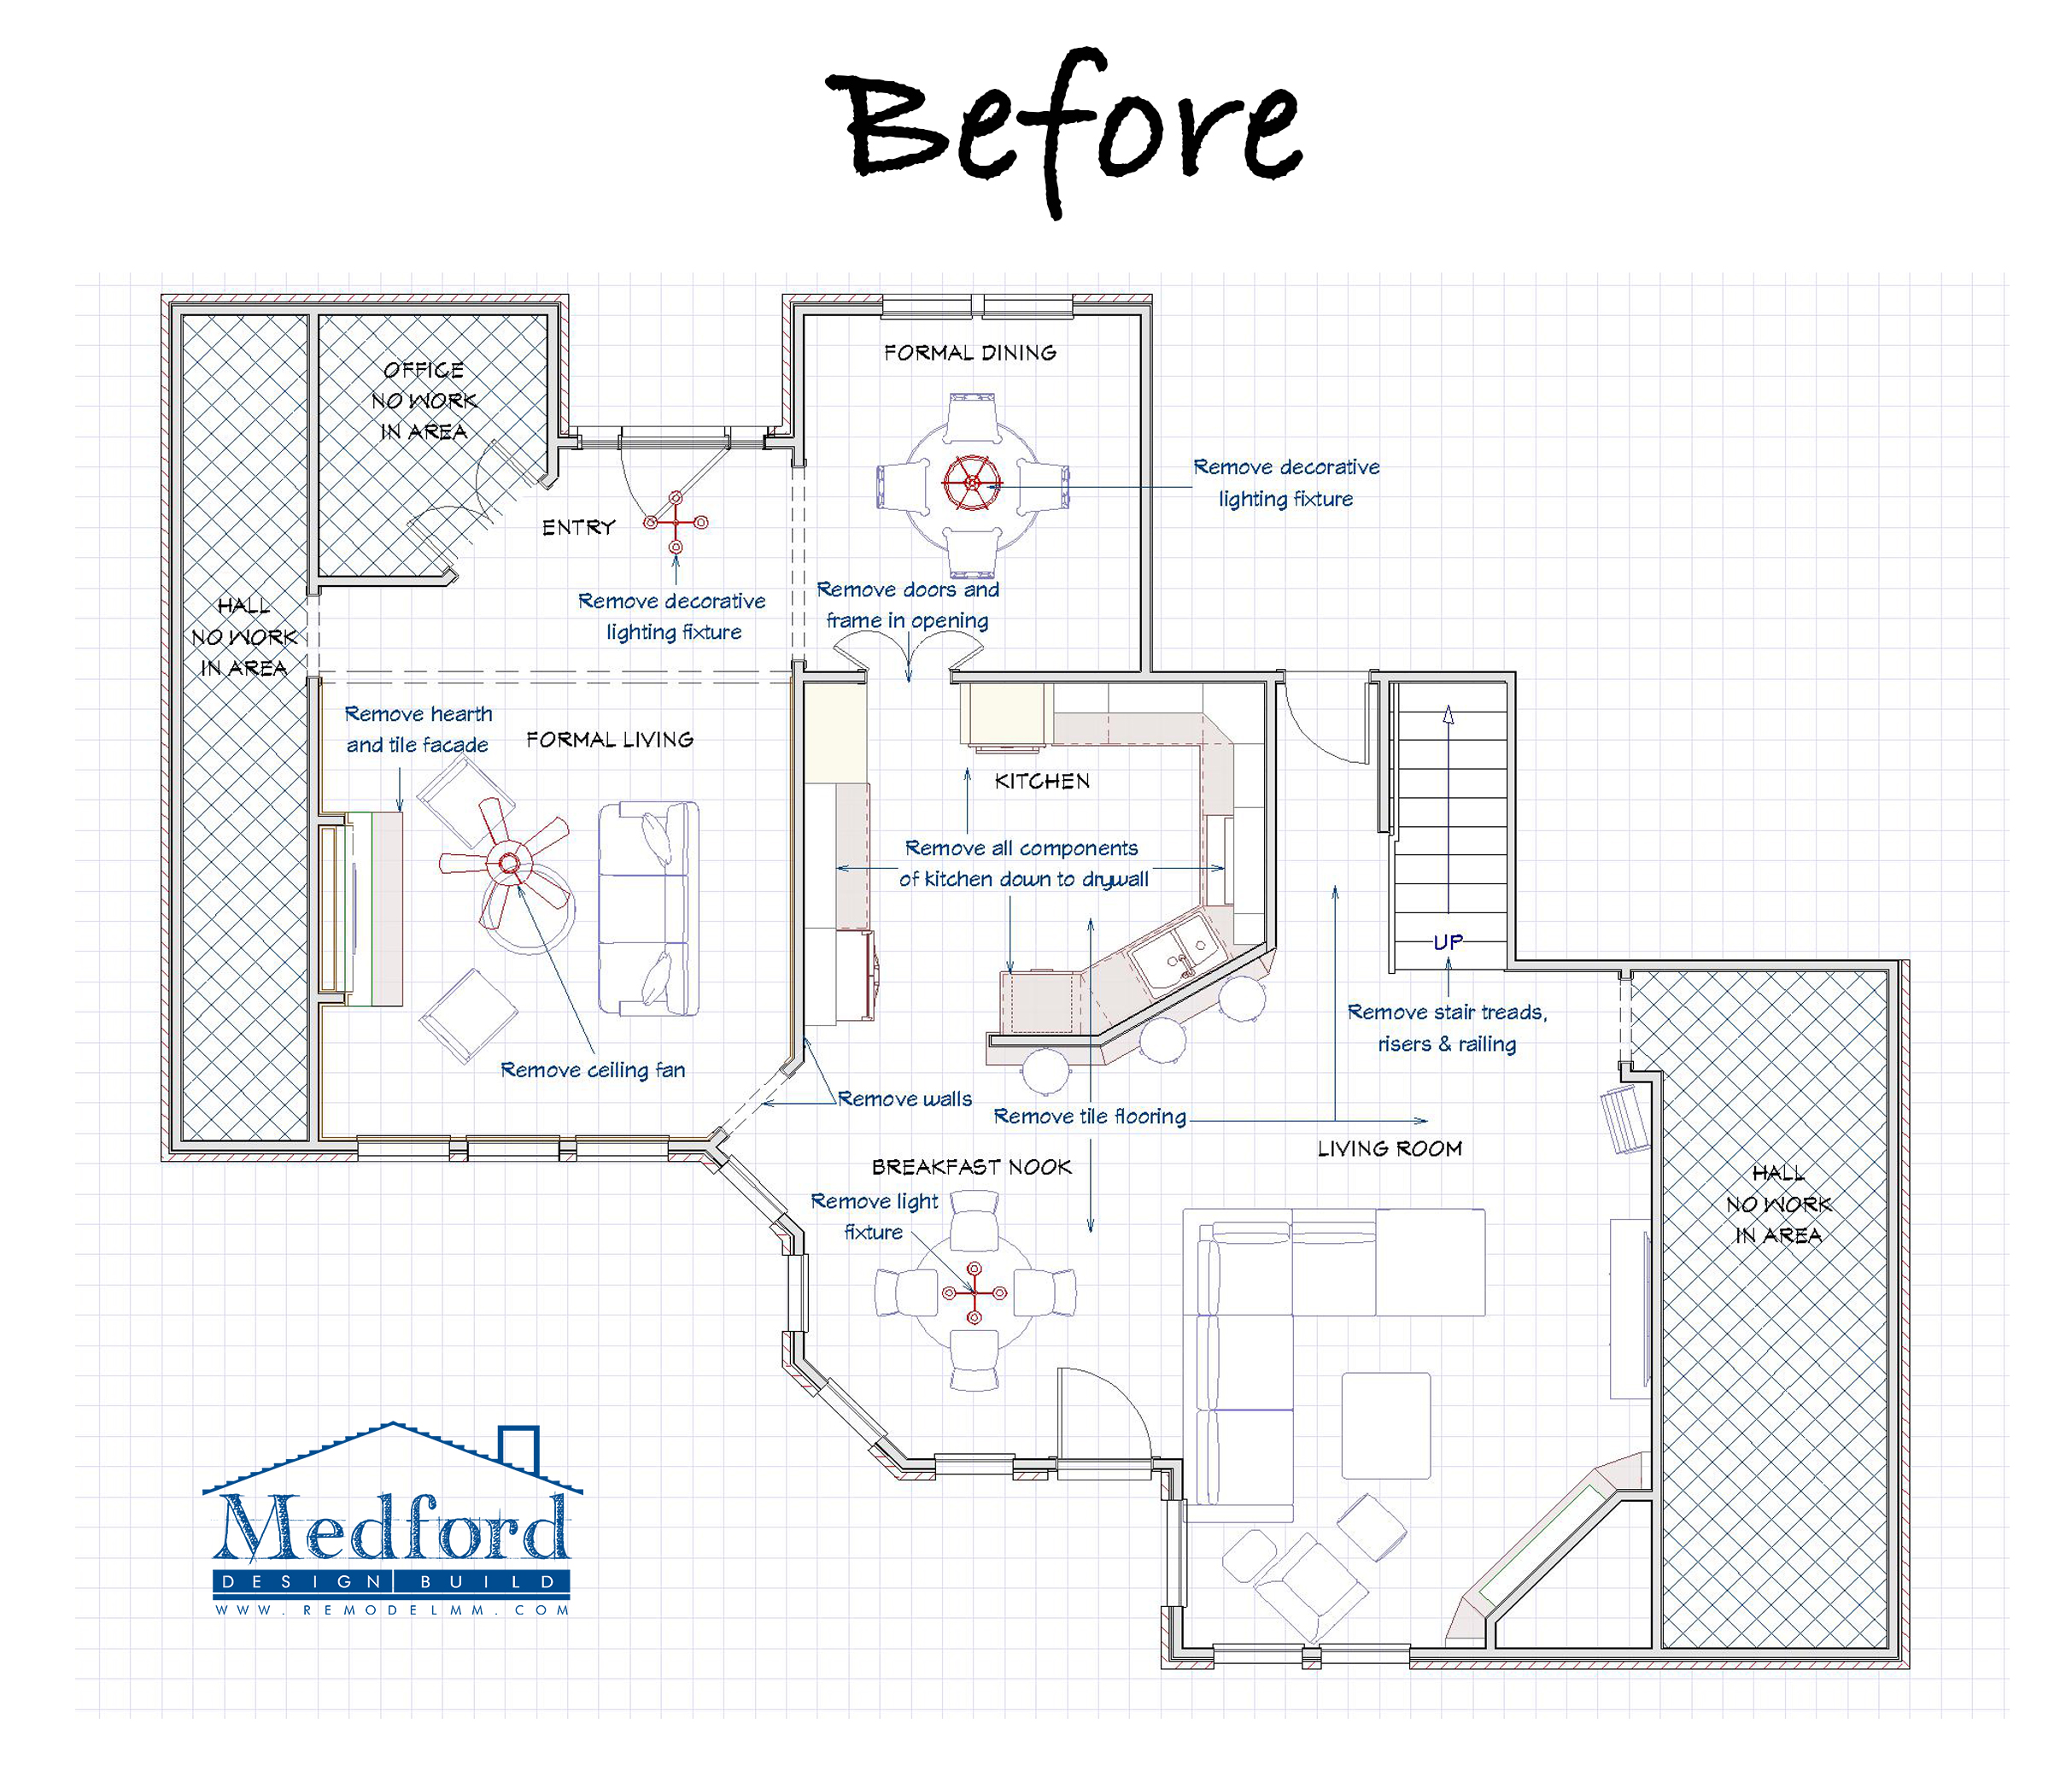 Southlake home's original floor plan before a major remodel